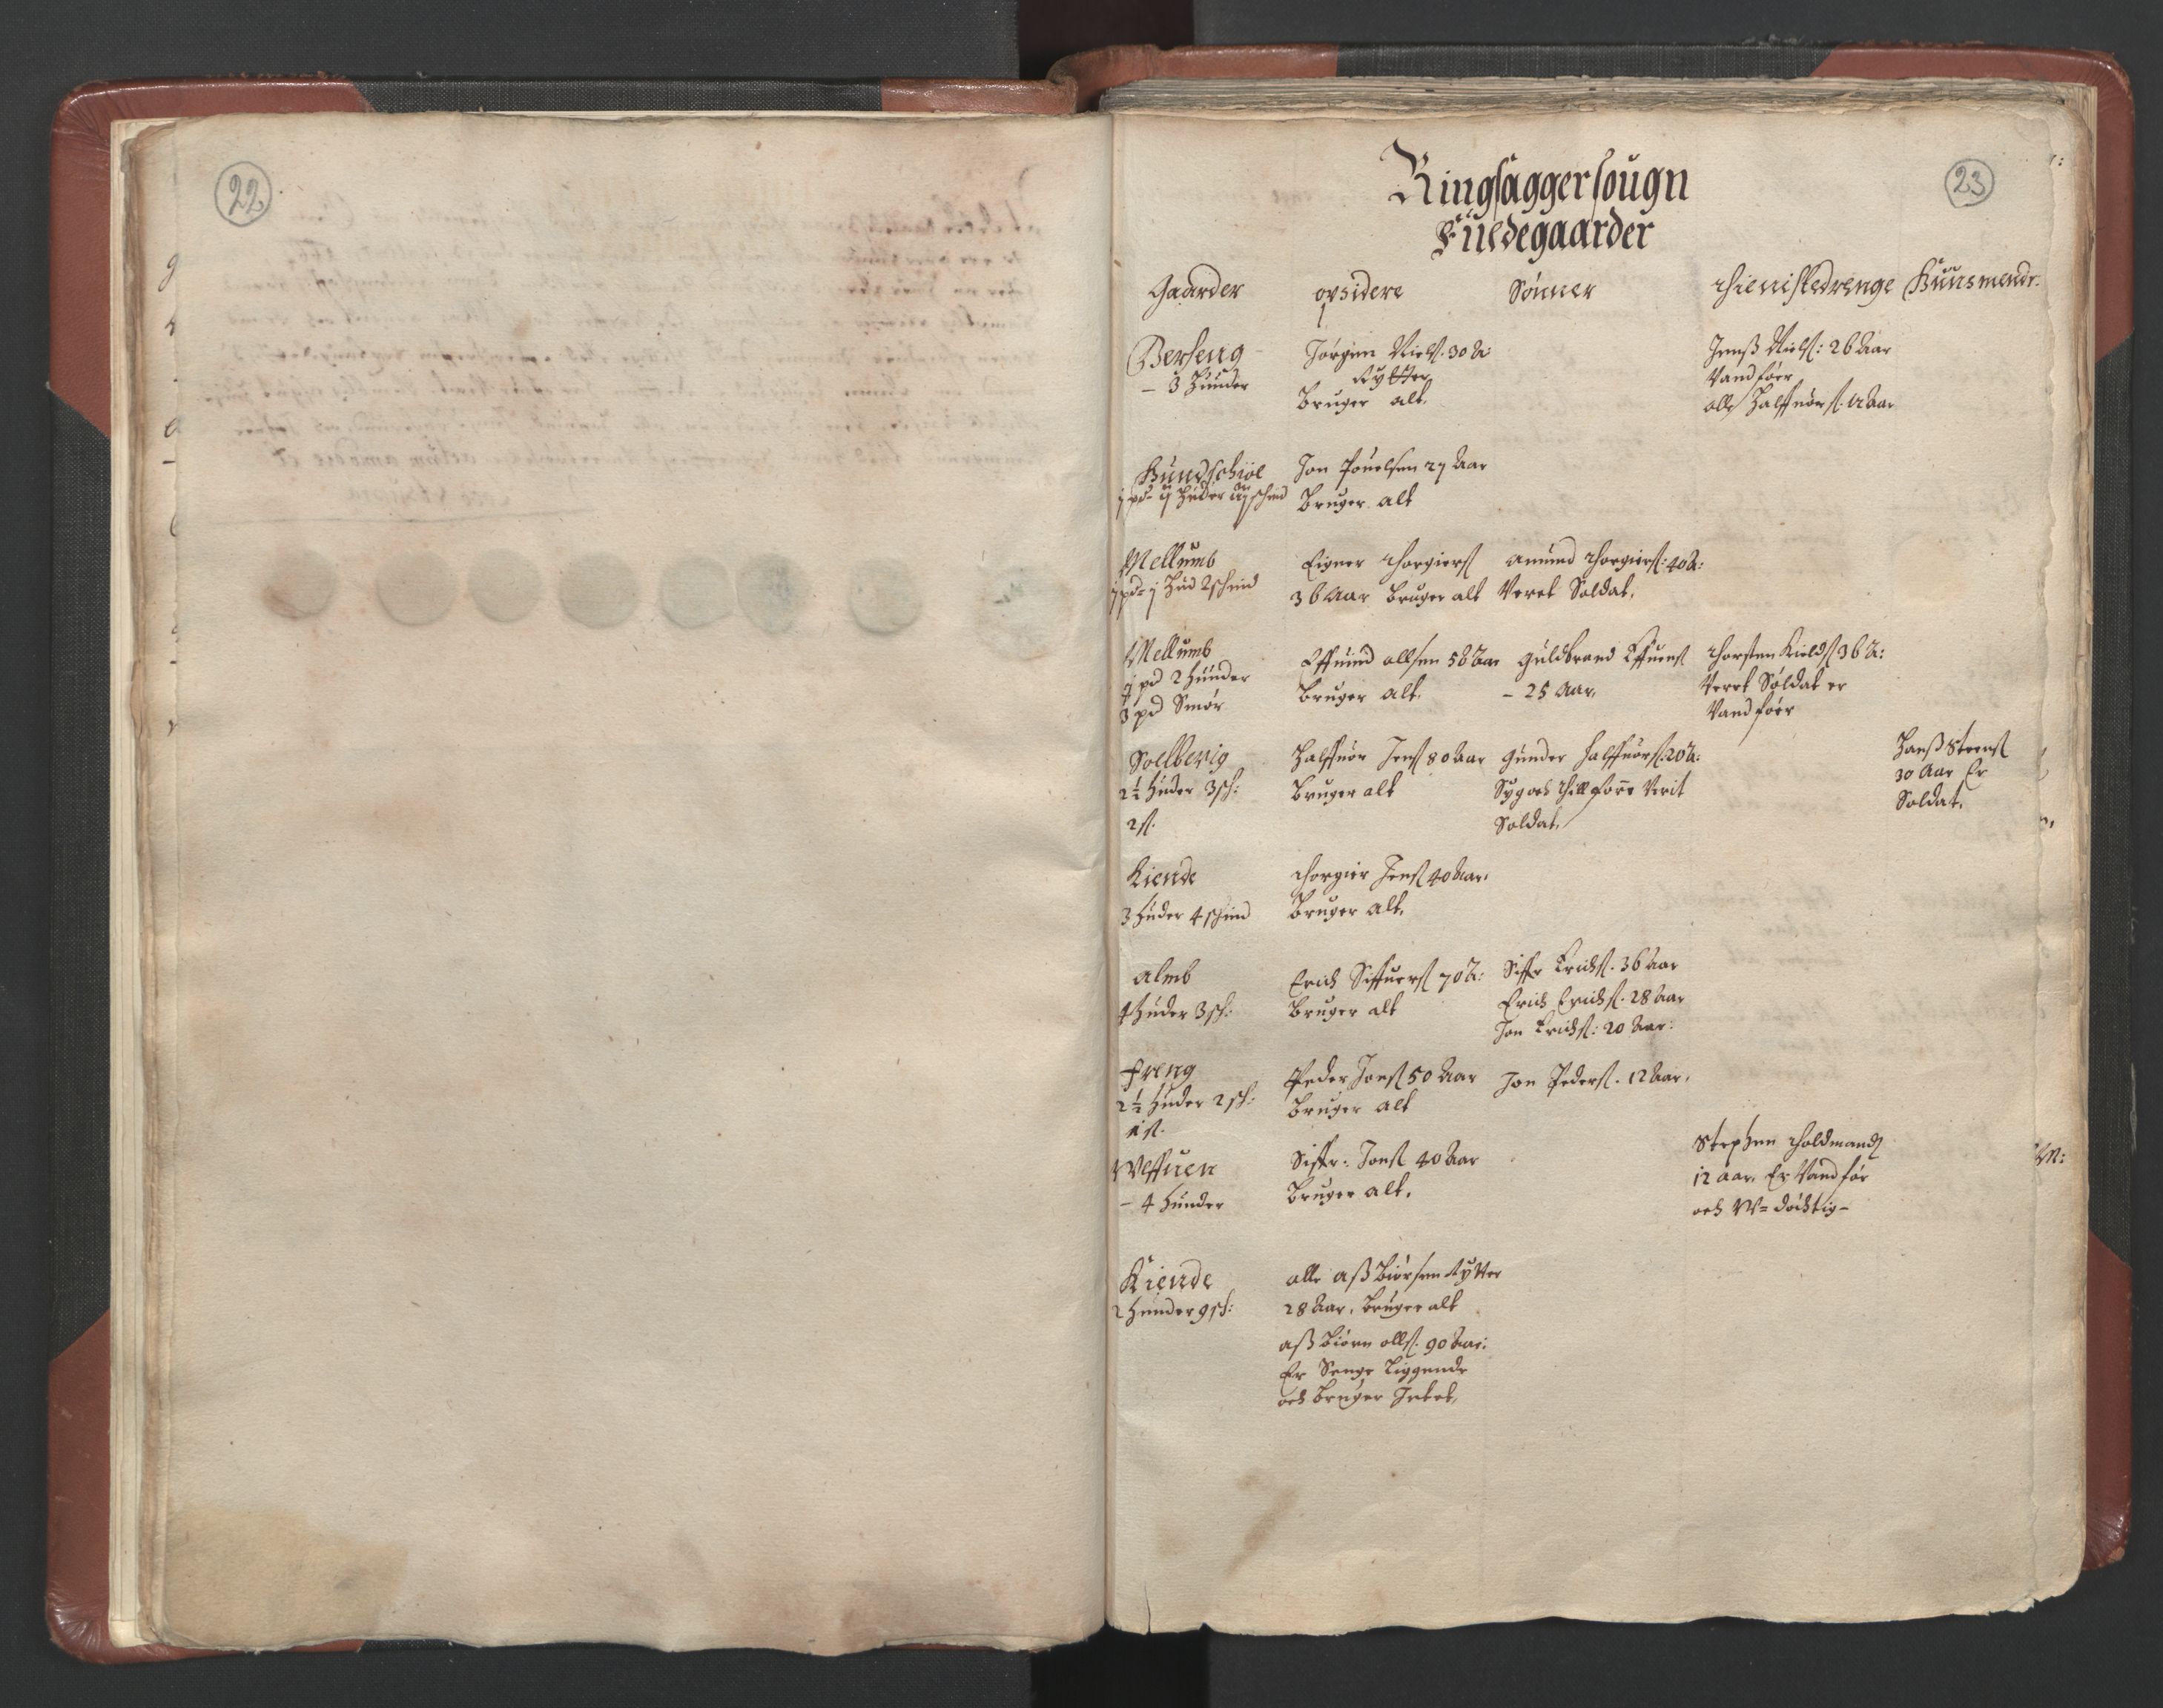 RA, Fogdenes og sorenskrivernes manntall 1664-1666, nr. 3: Hedmark fogderi og Solør, Østerdal og Odal fogderi, 1664, s. 22-23